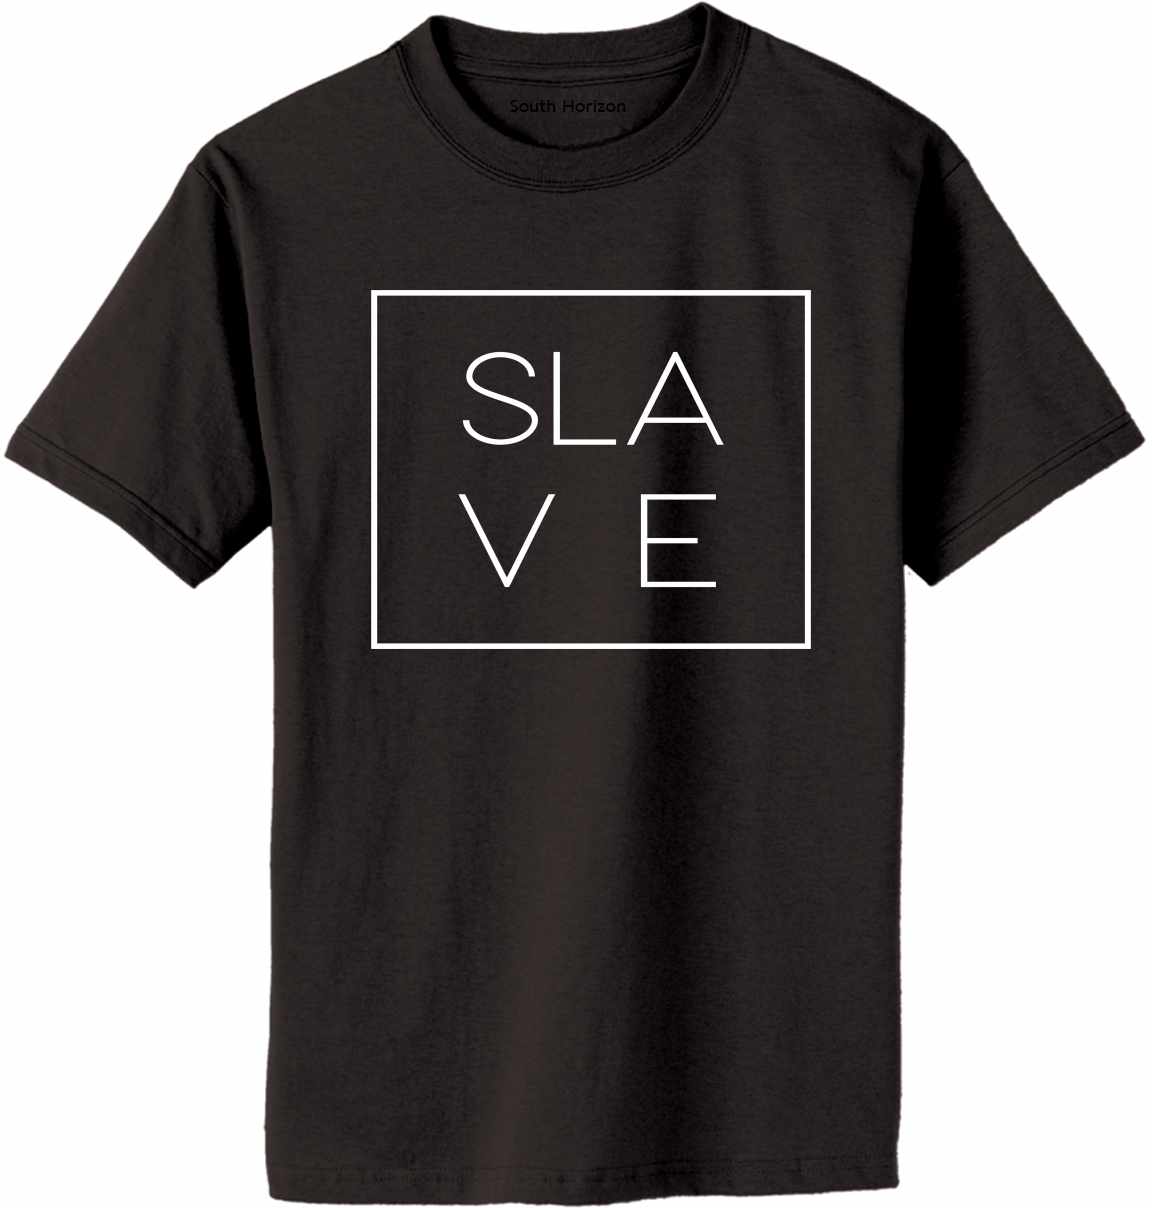 SLAVE on Adult T-Shirt (#1324-1)